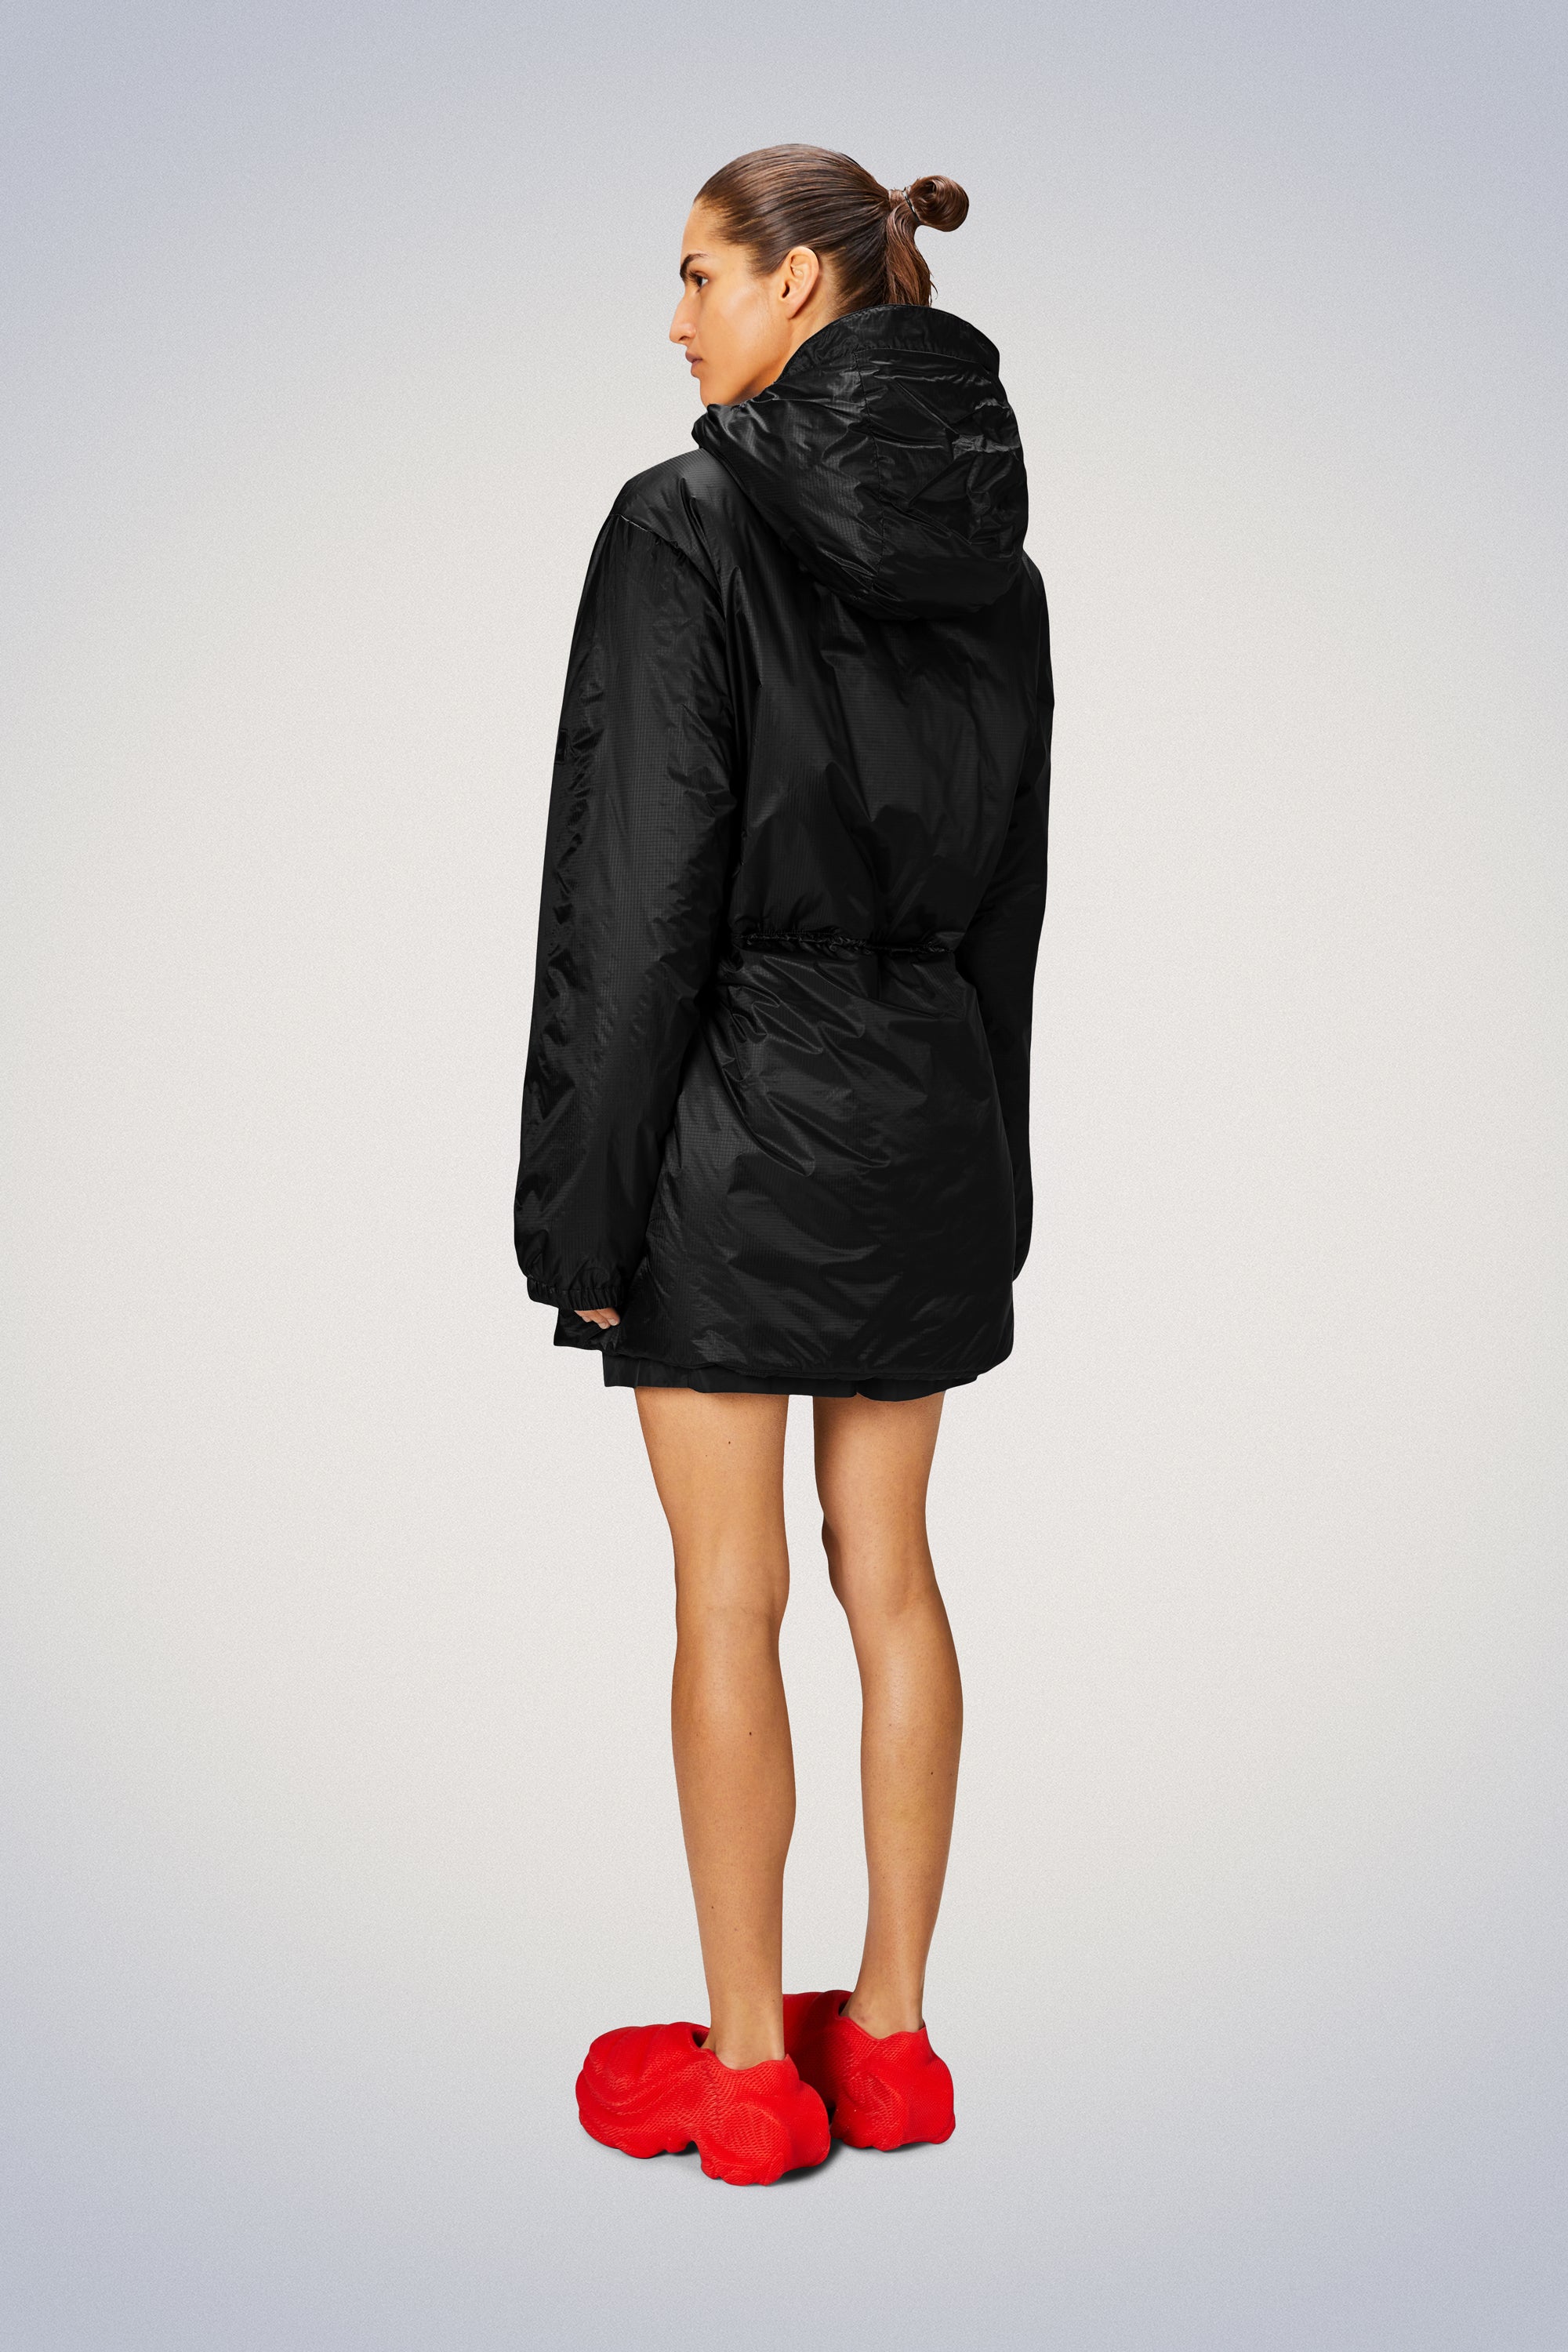 Rains® Kaunas Long String Jacket in Black for £229 | Free Shipping